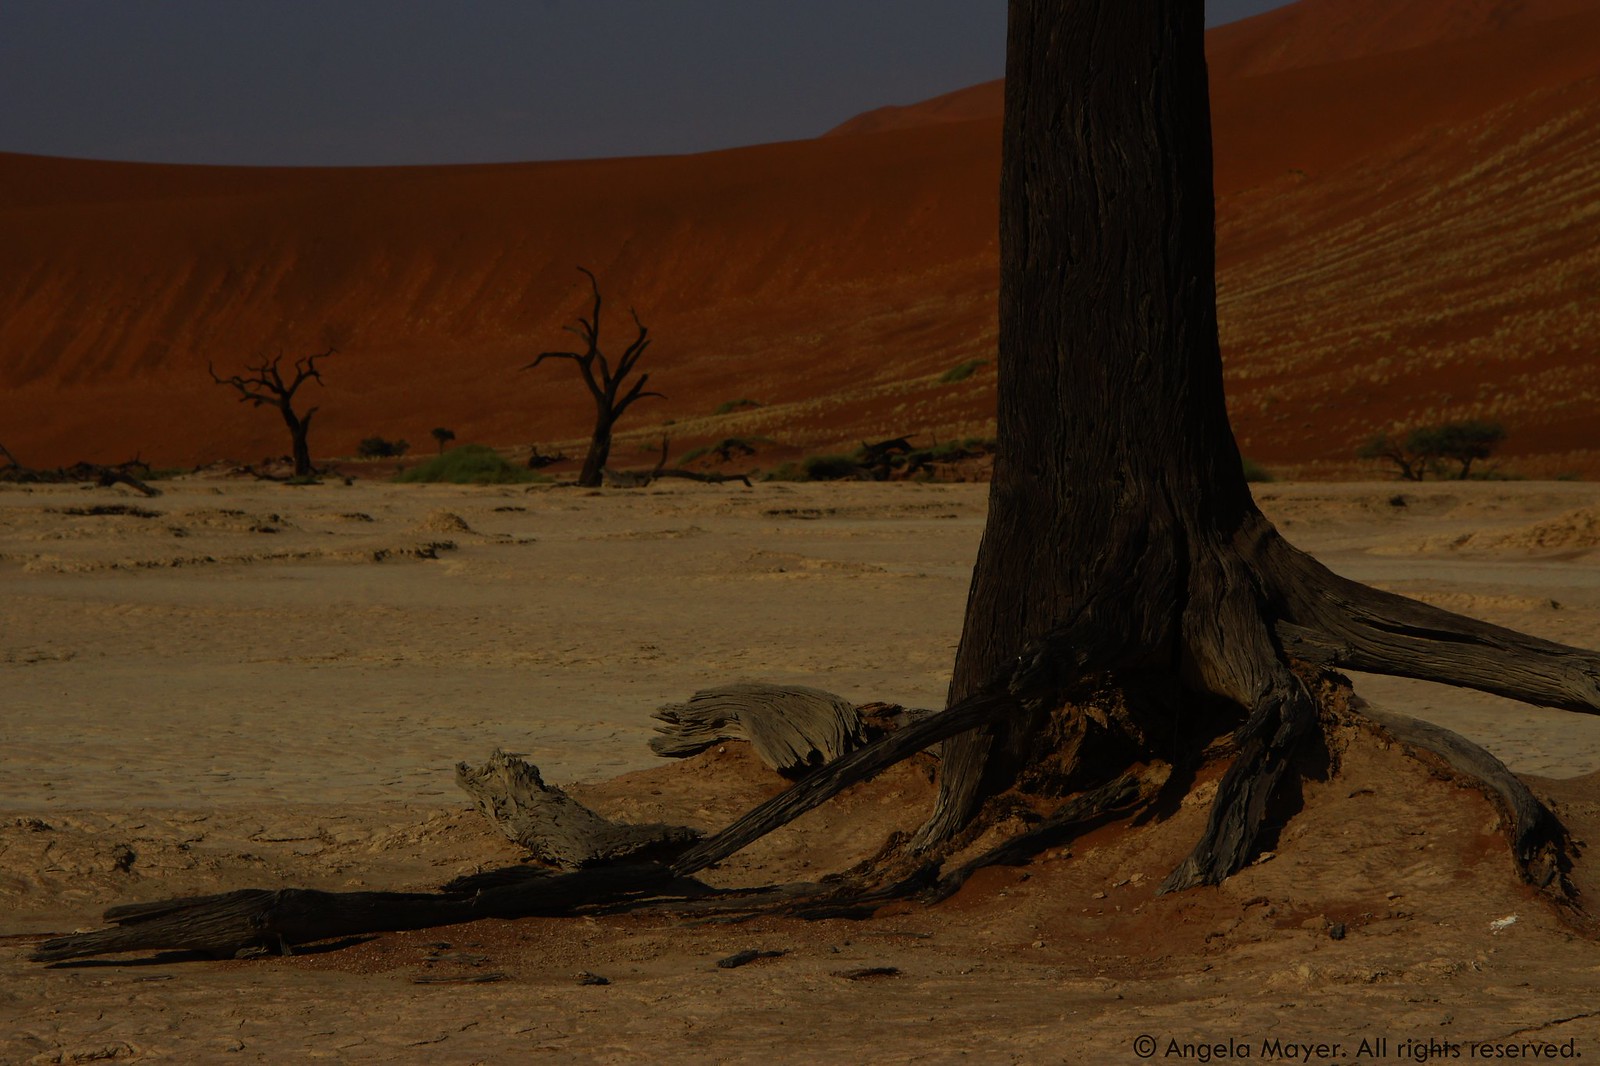 Dead camel thorn trees